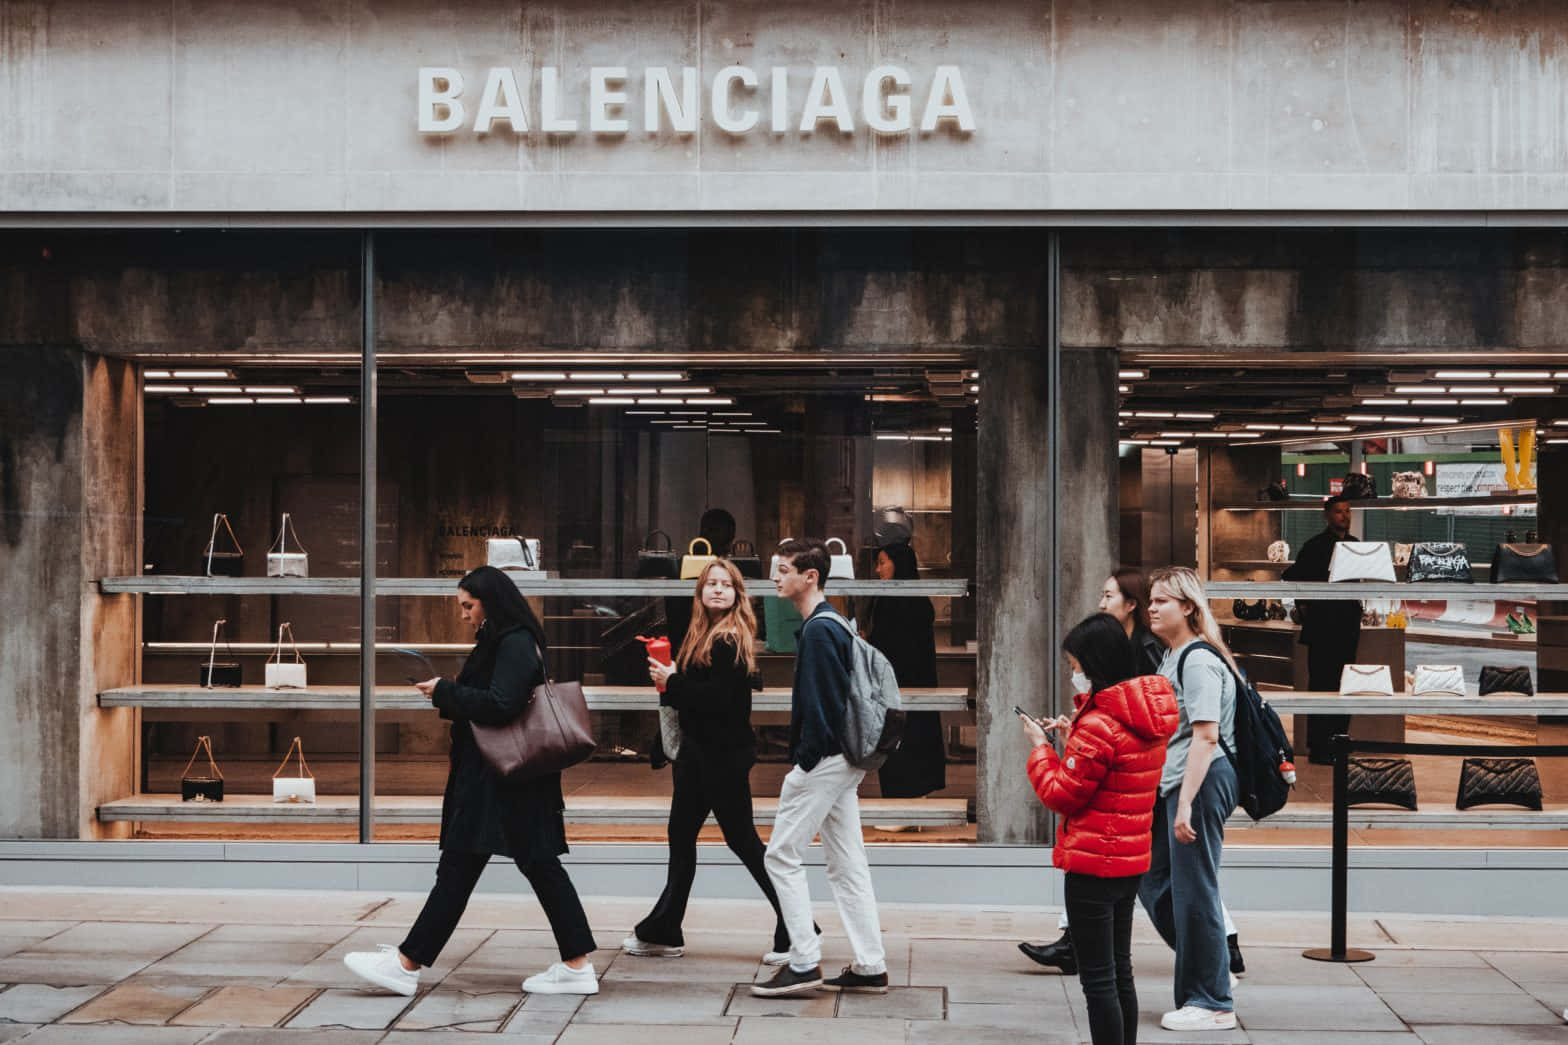 Balenciaga's edgy athletic style